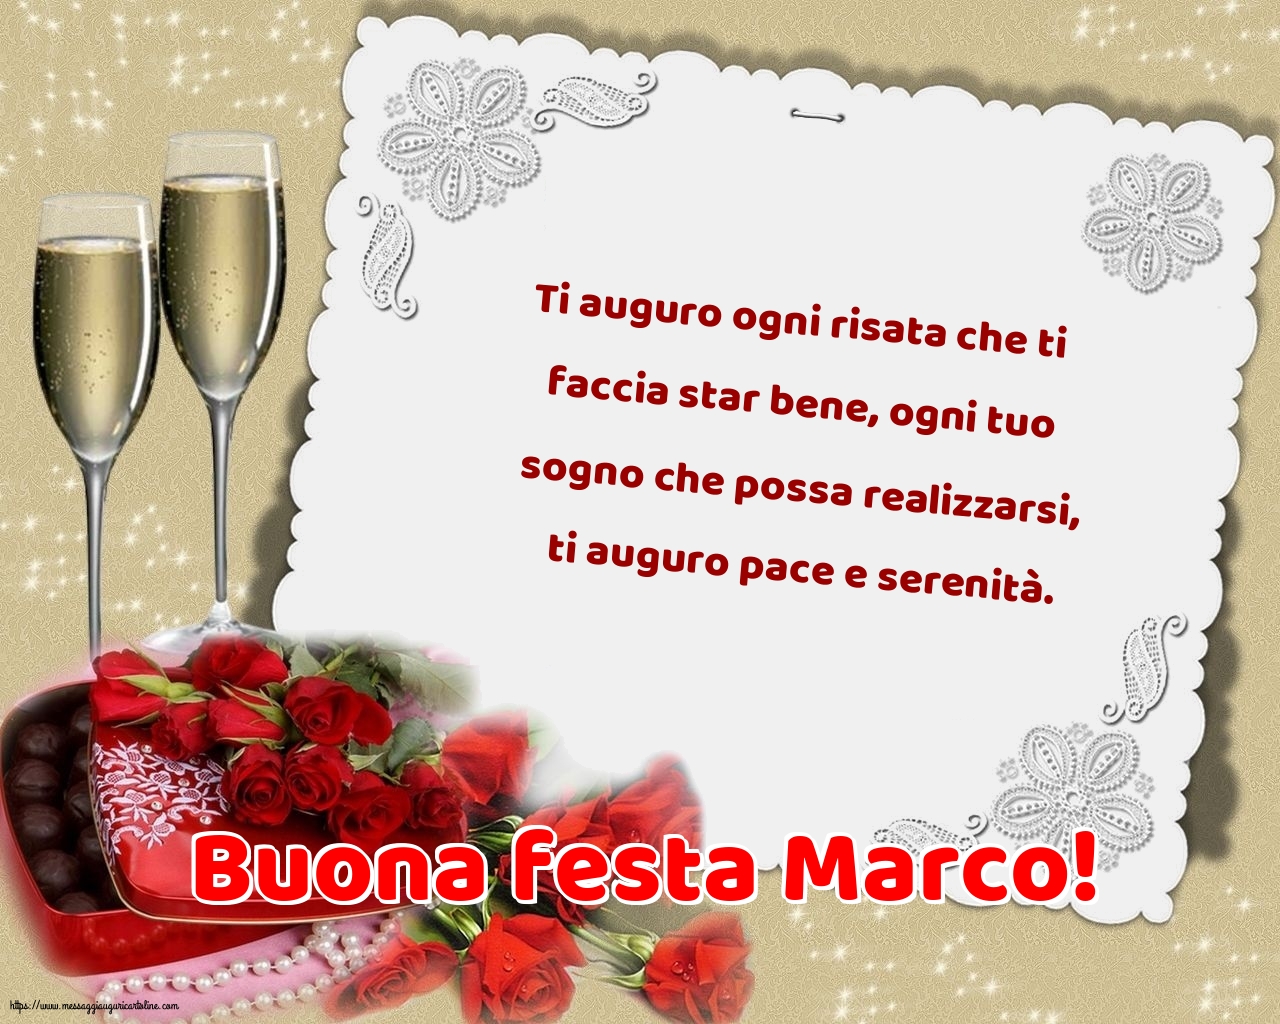 Cartoline di San Marco - Buona festa Marco! - messaggiauguricartoline.com